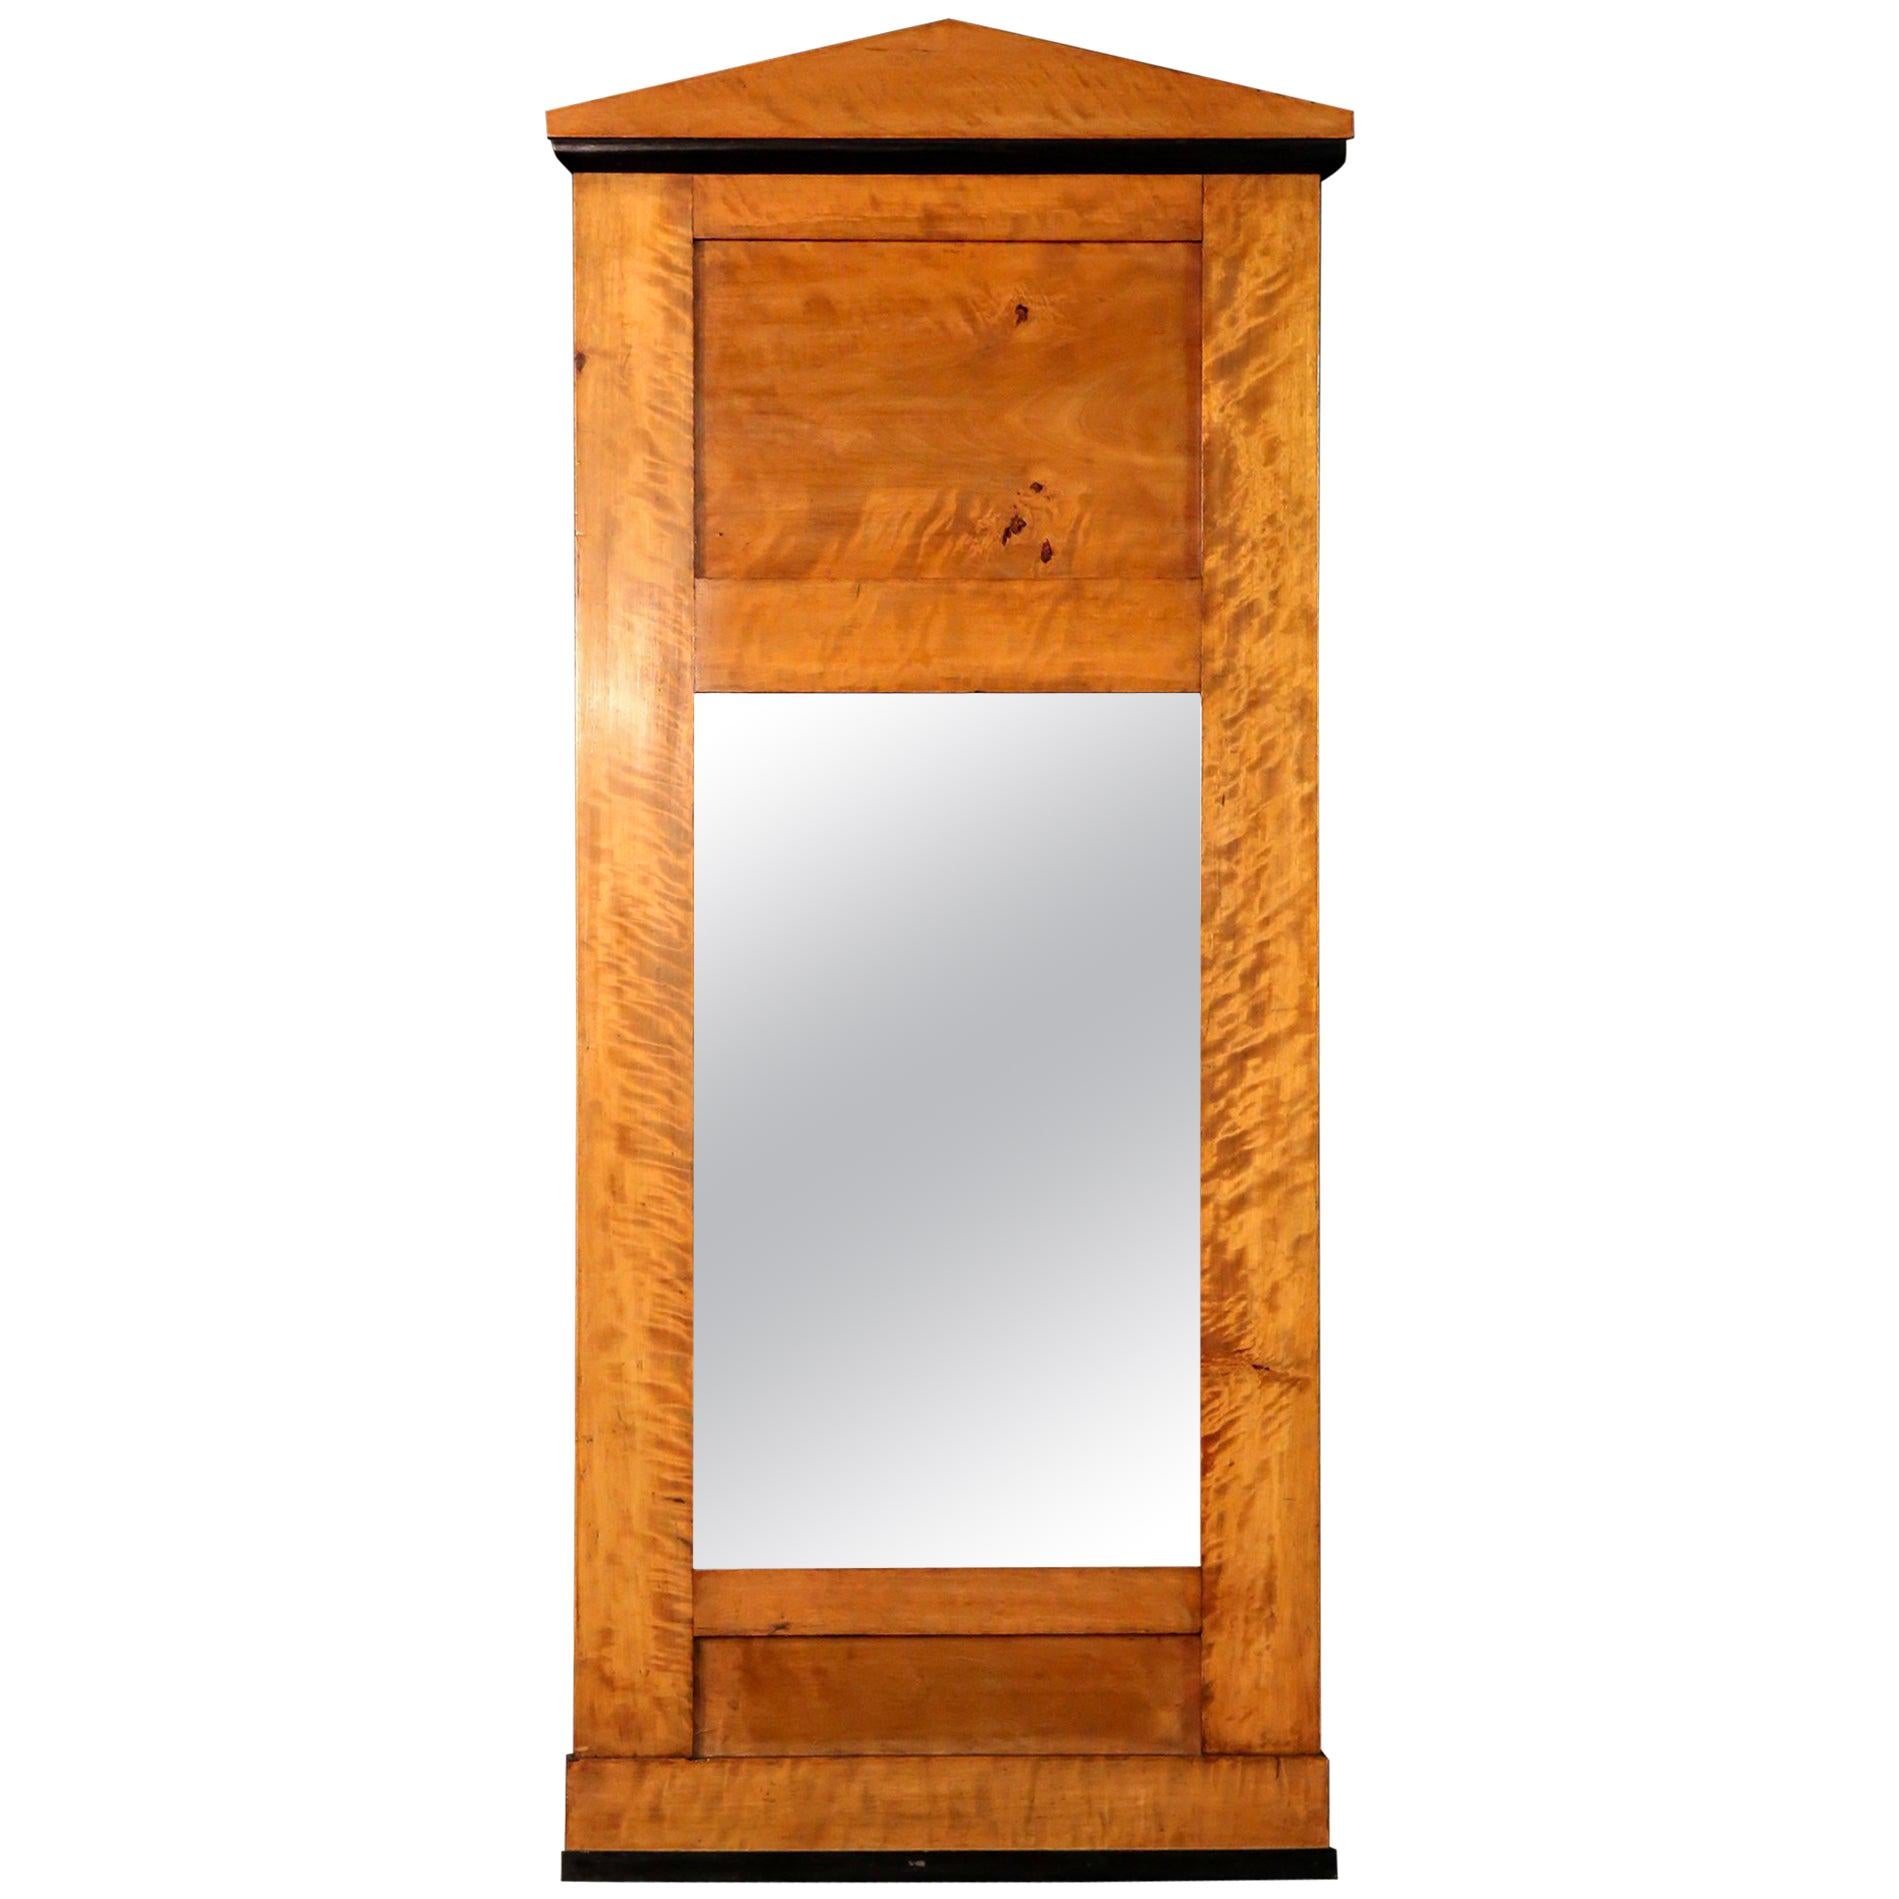 19th Century Biedermeier Style Mirror in Birch Wood